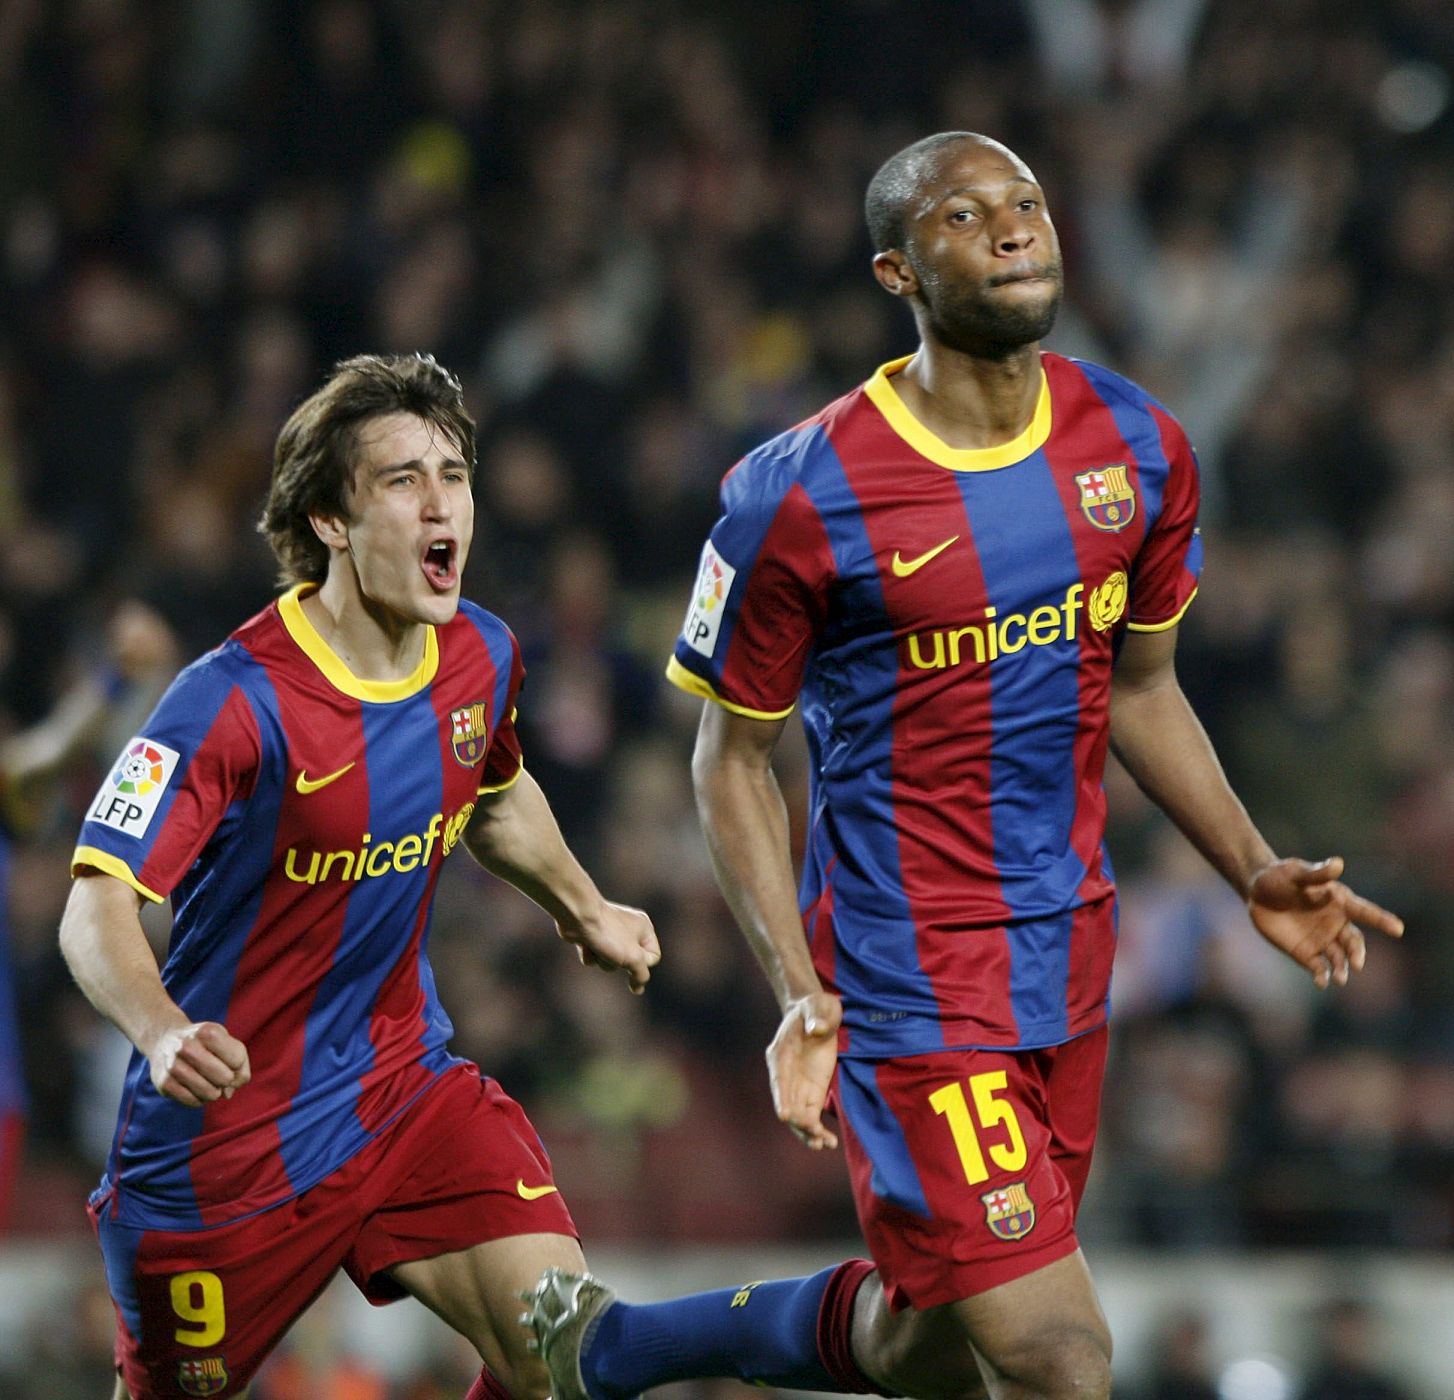 El mediocentro malí del FC Barcelona Seydou Keita celebra su gol con su compañero Bojan Krkic.